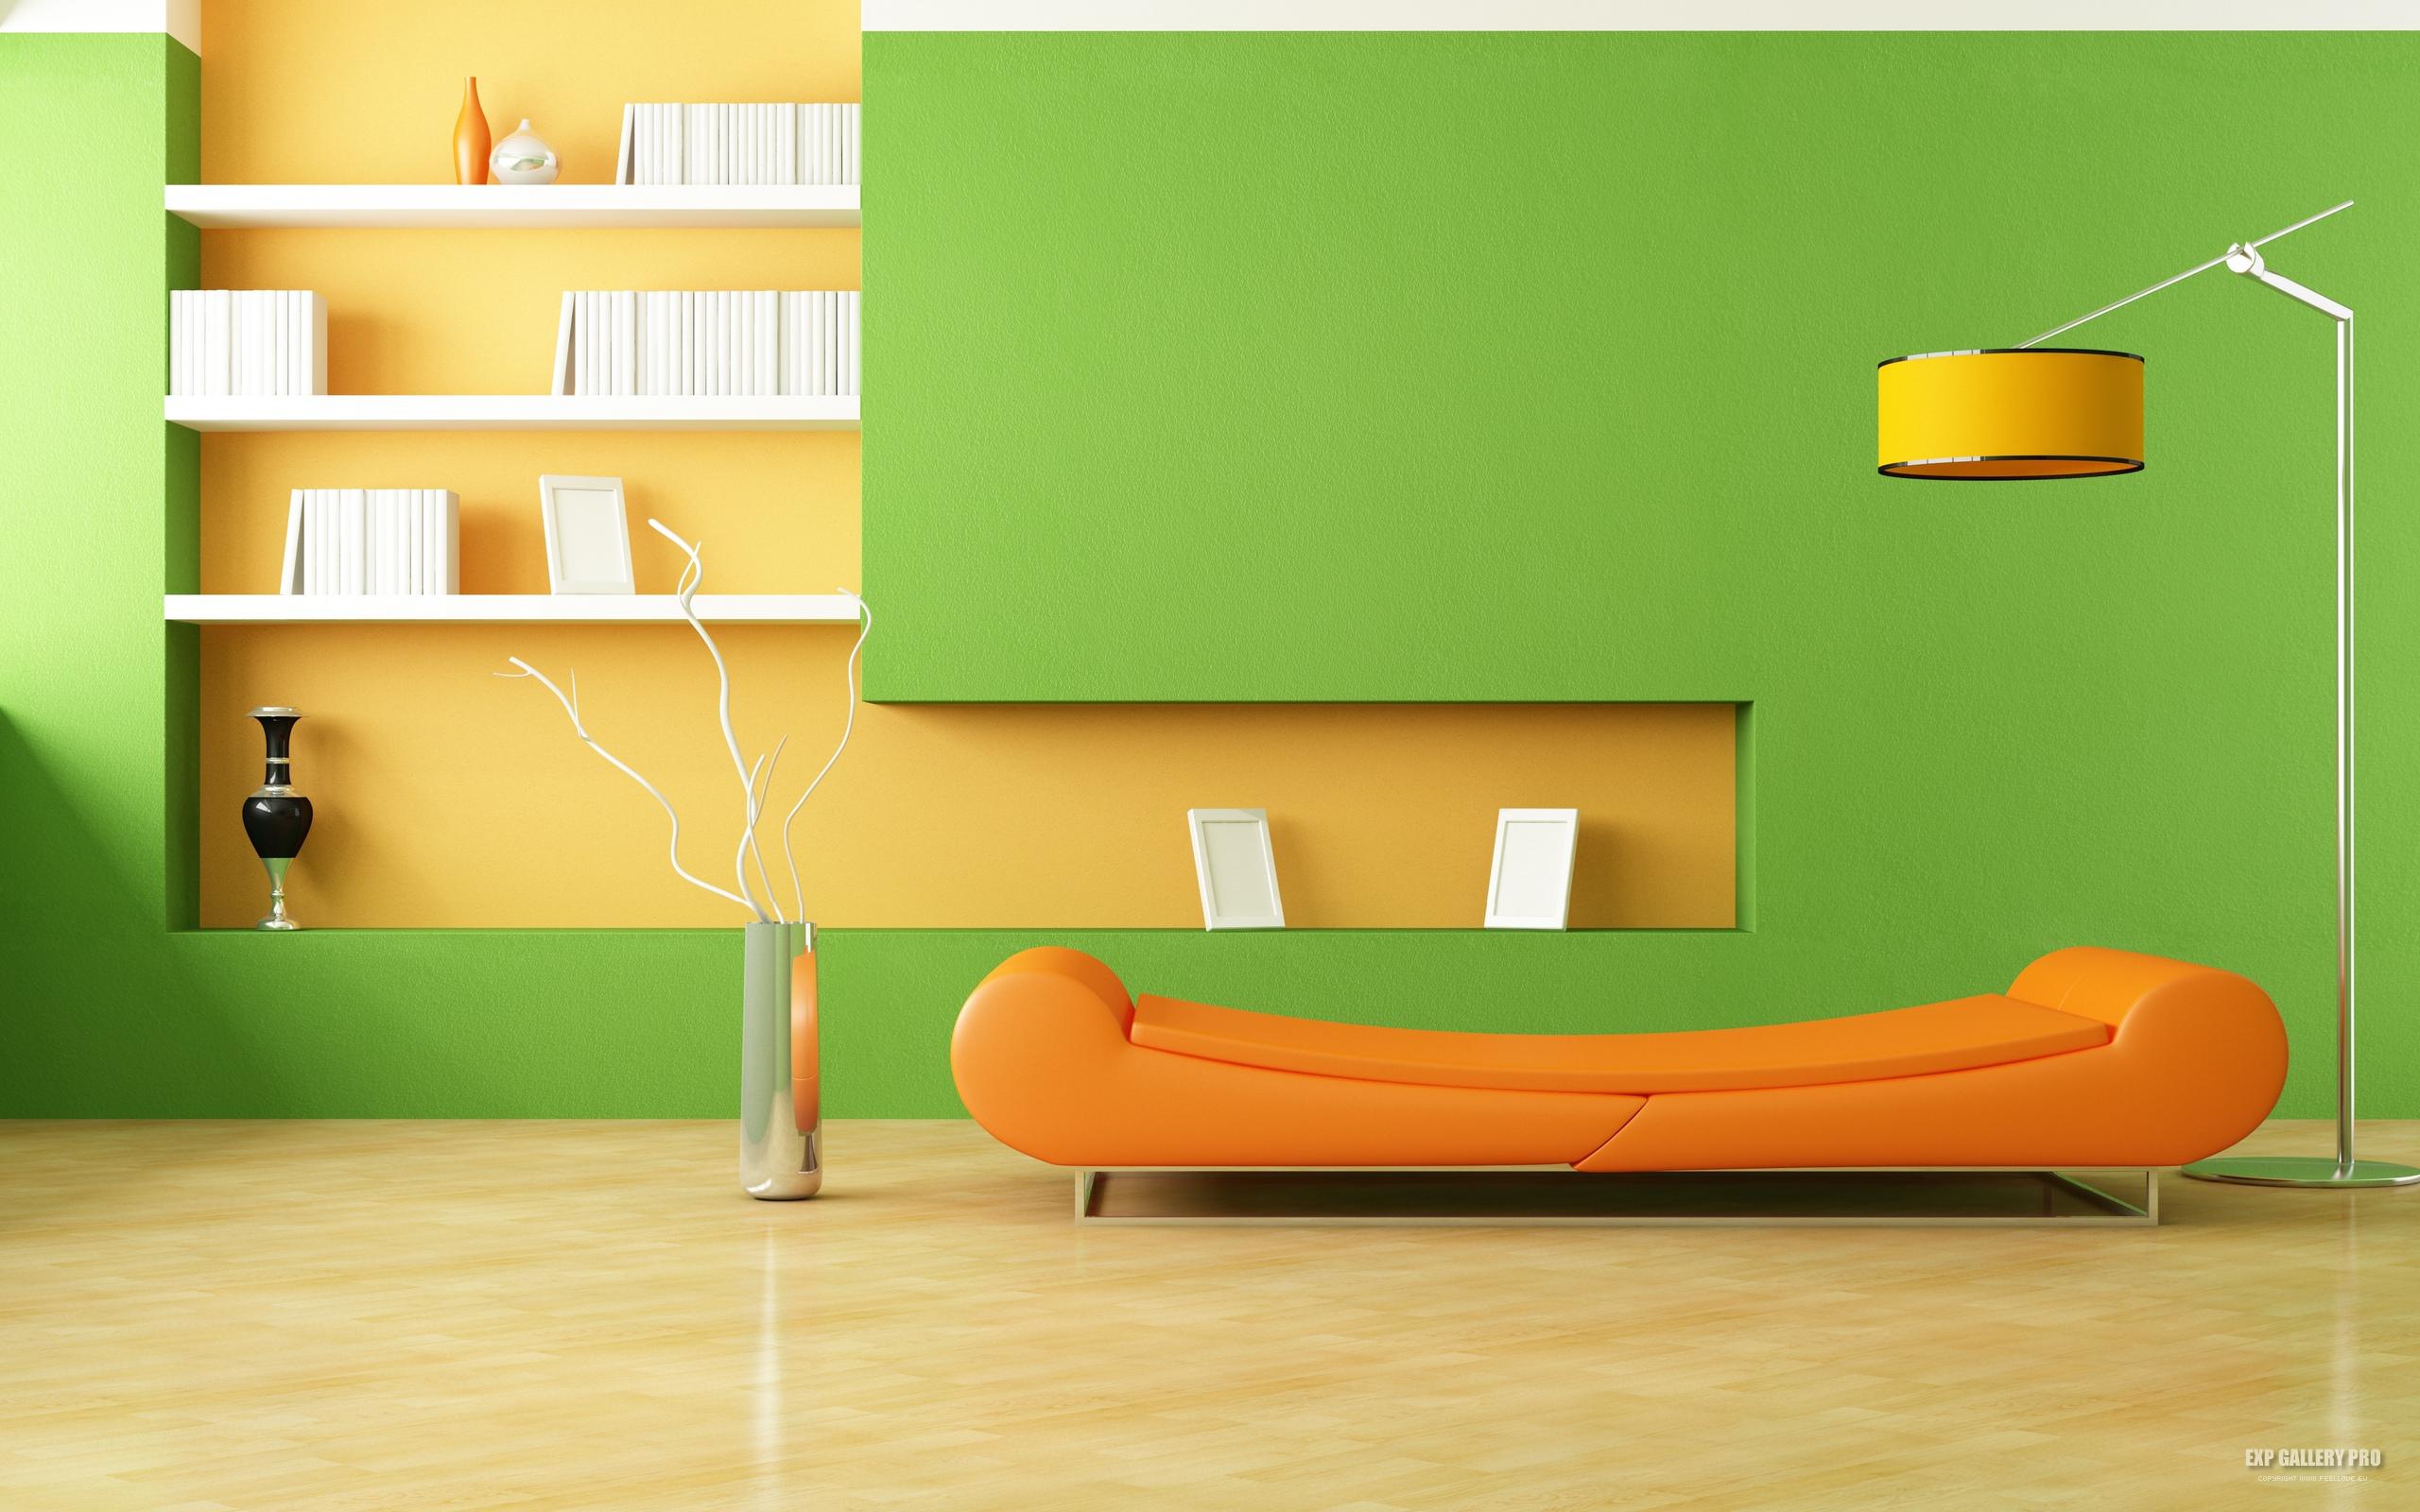 furniture-wallpaper-21467-22381-hd-wallpapers